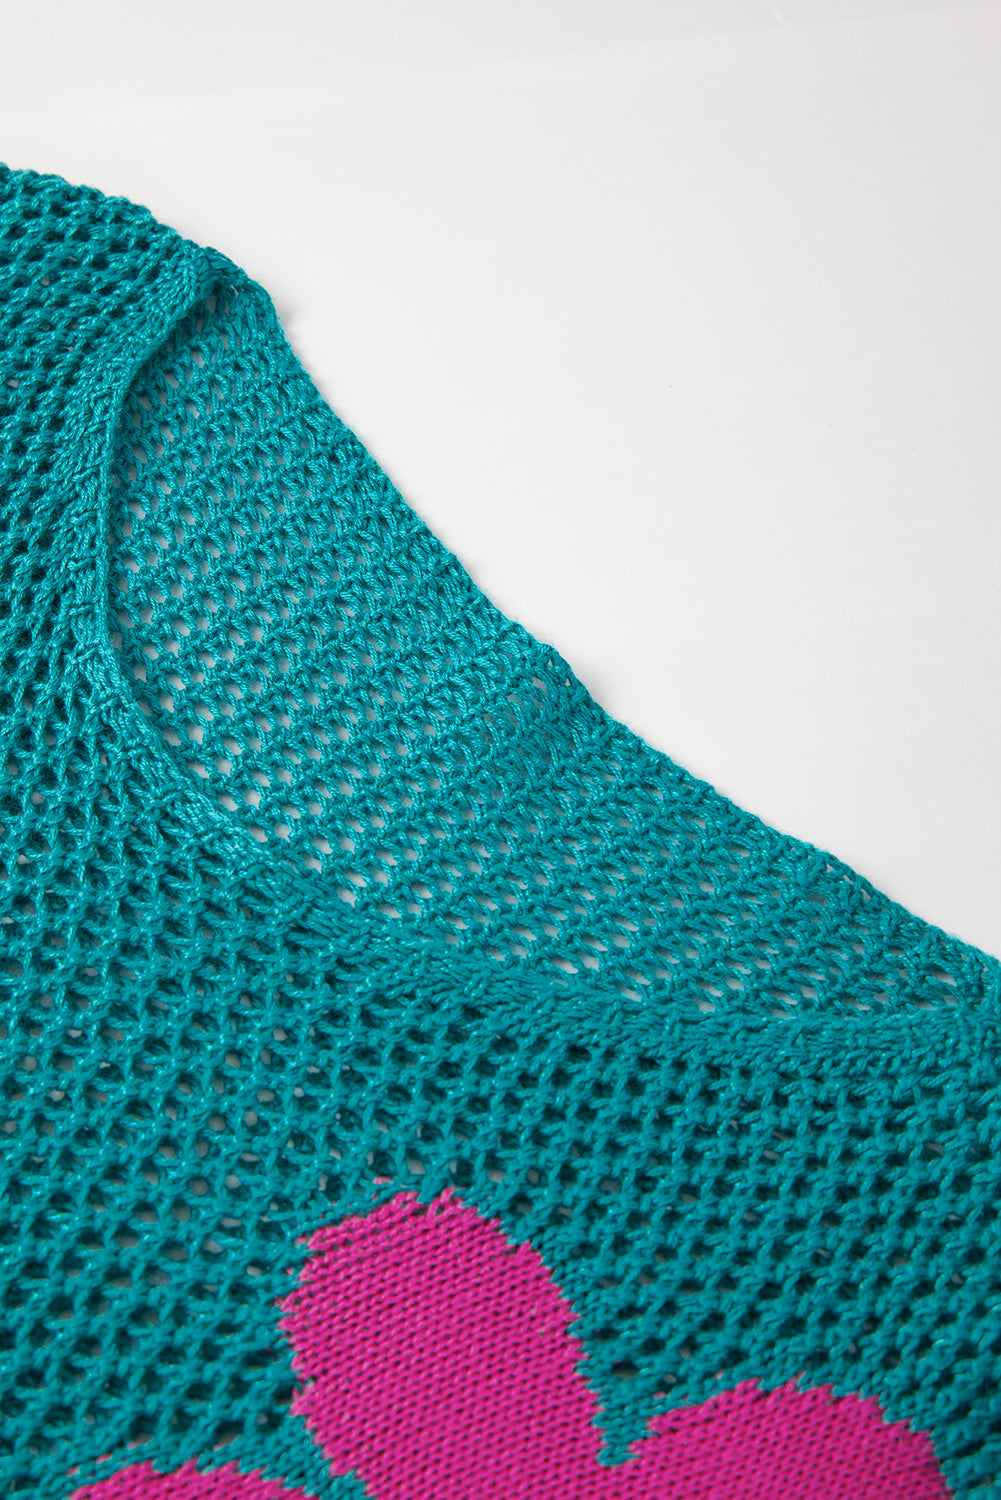 Sea Green Big Flower Hollowed Knit Drop Shoulder Sweater